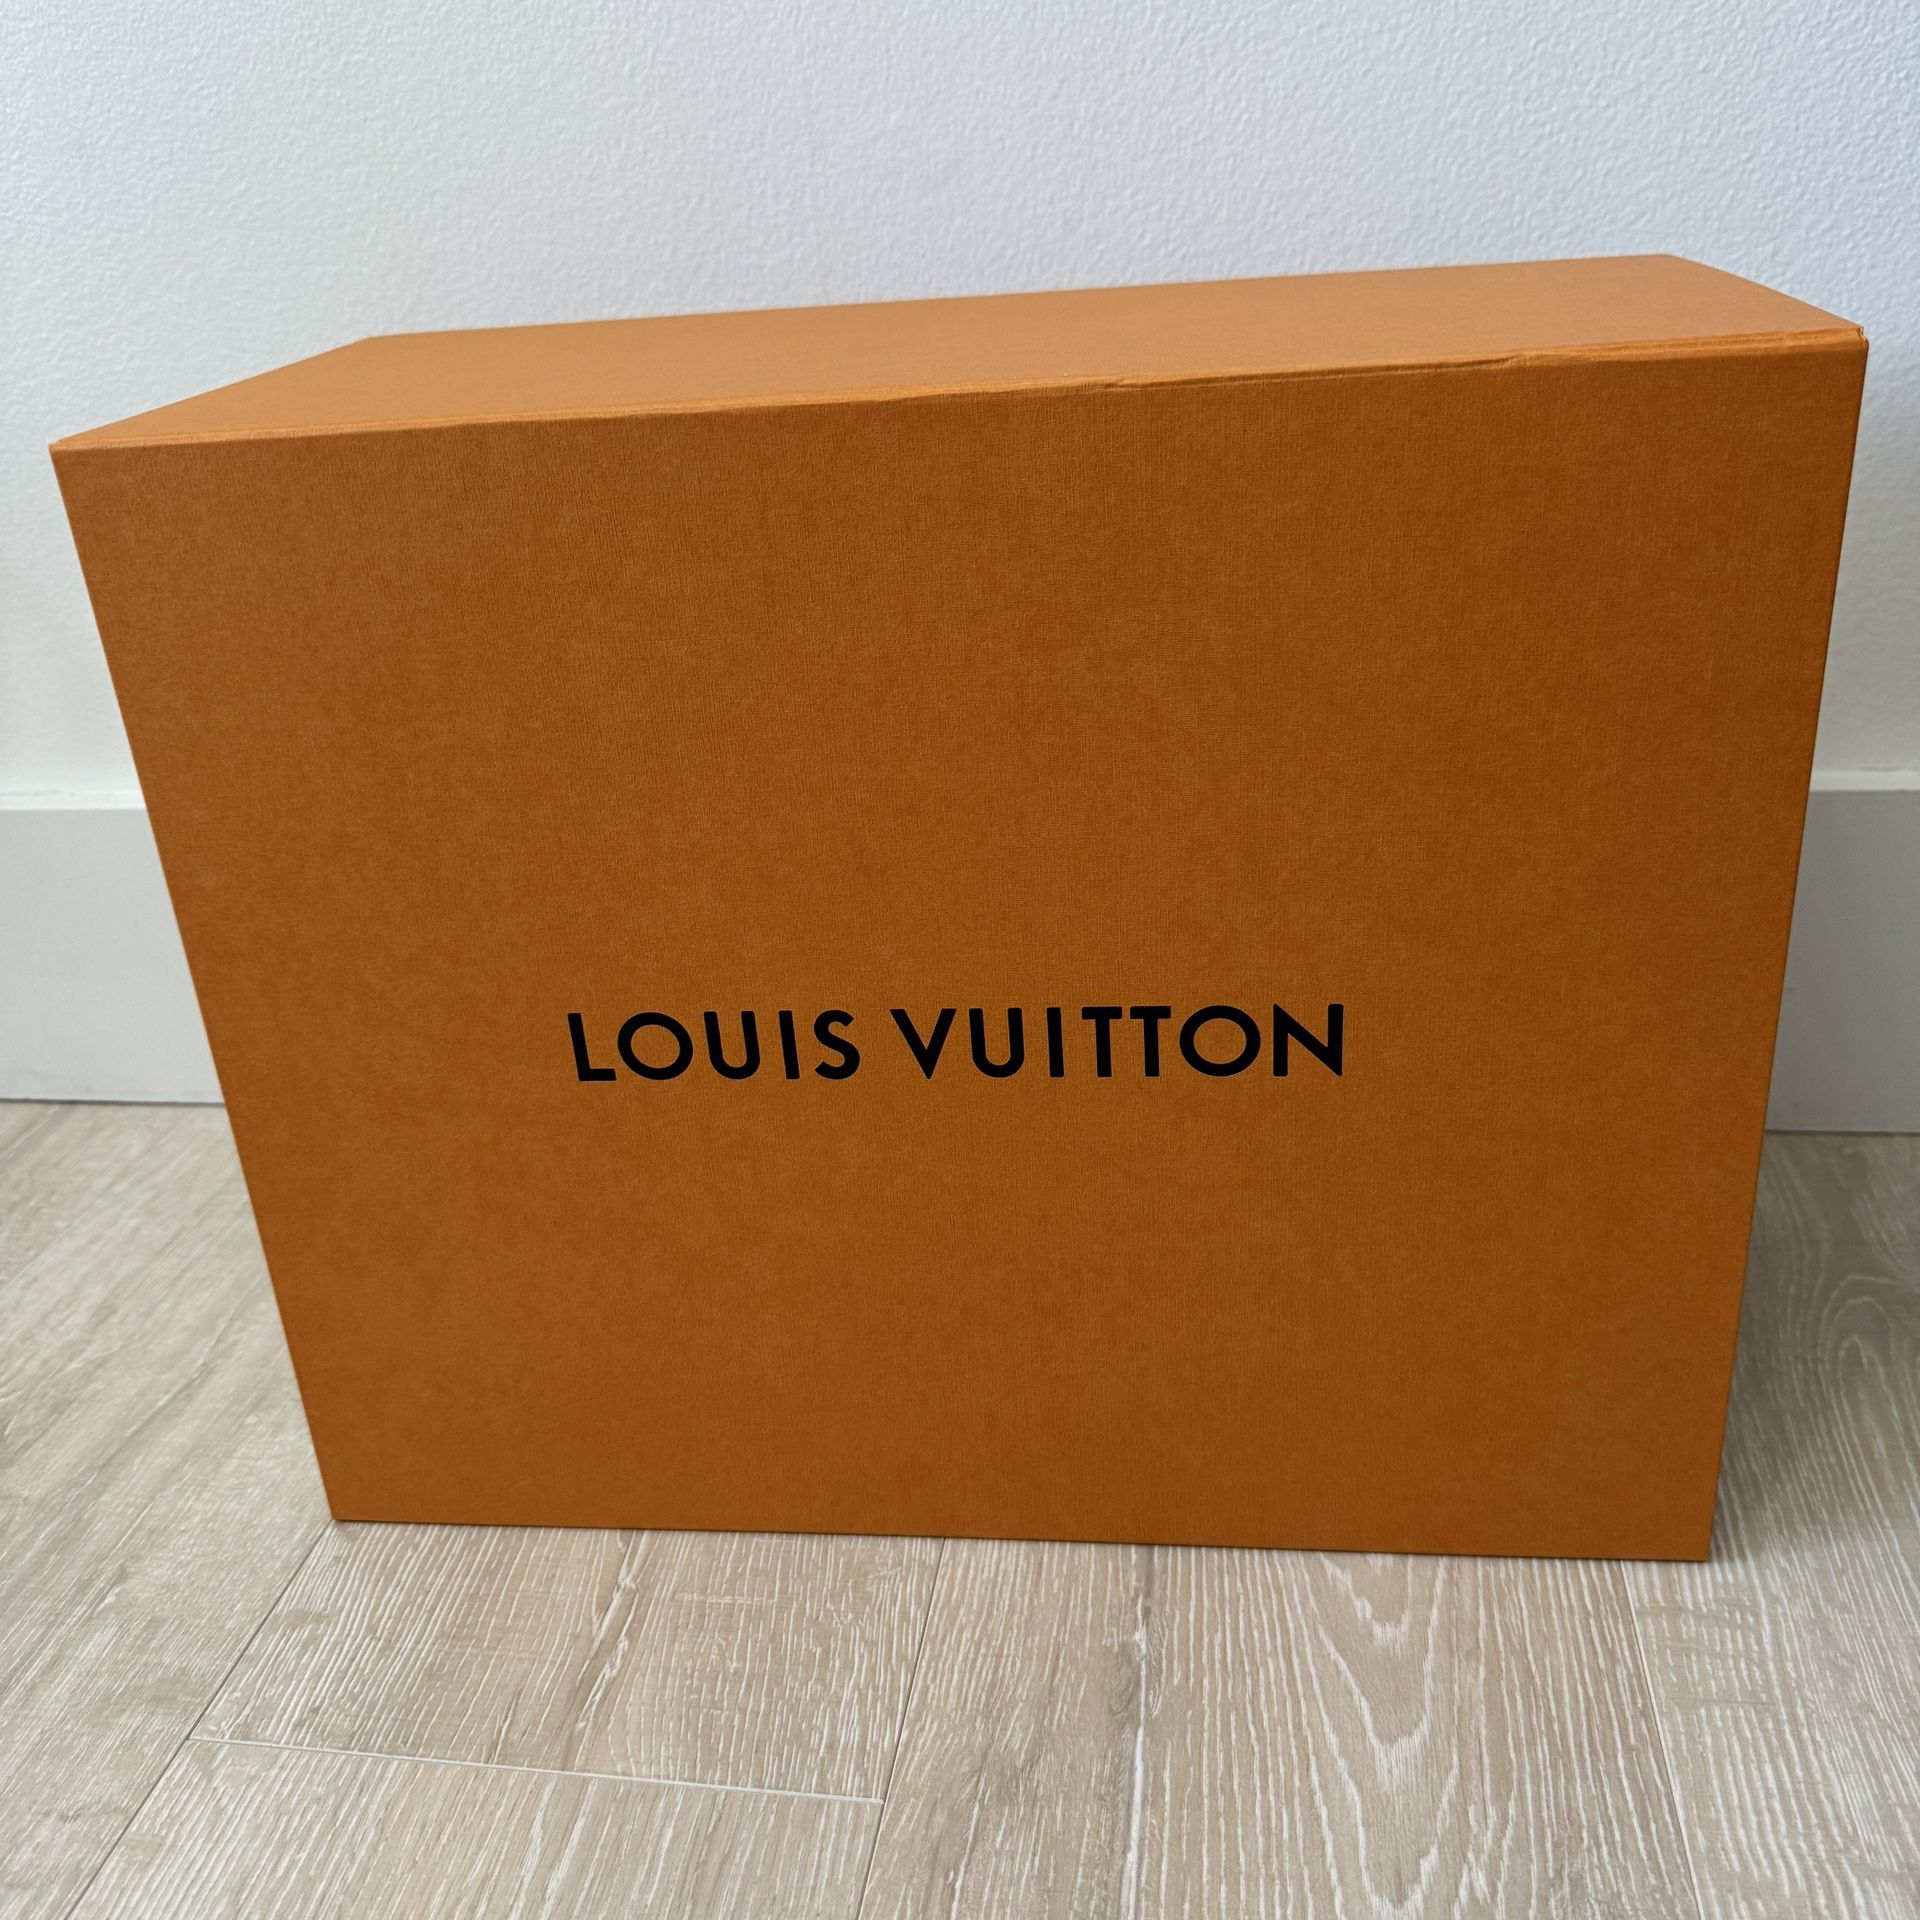 Louis Vuitton Large Box Empty Box